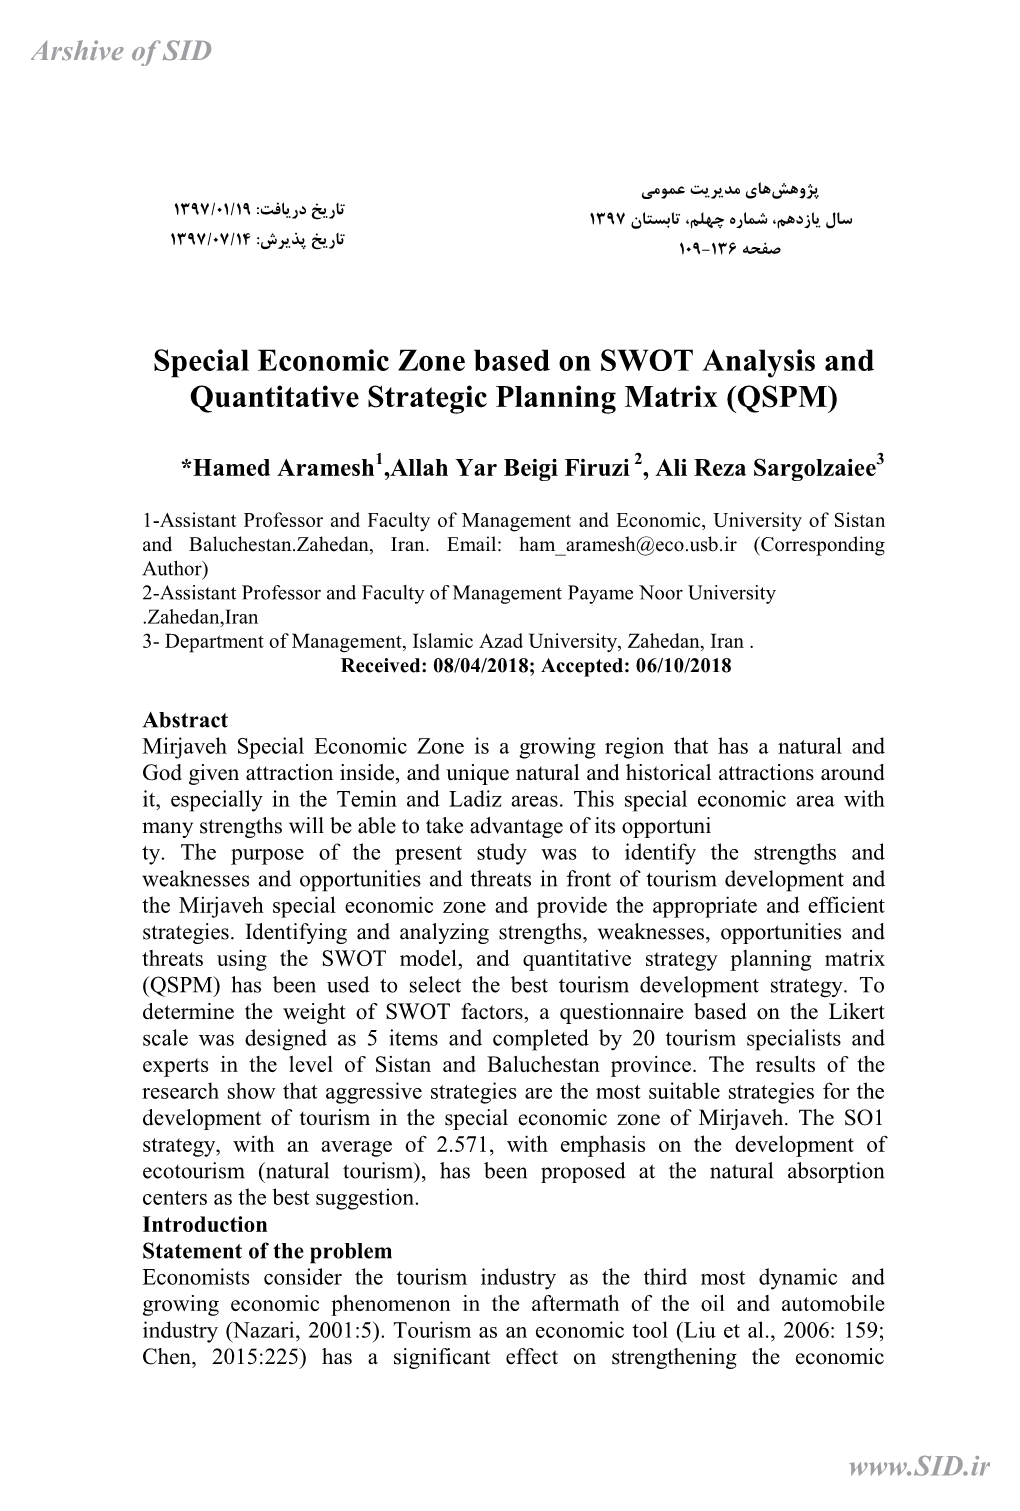 Special Economic Zone Based on SWOT Analysis and Quantitative Strategic Planning Matrix (QSPM)